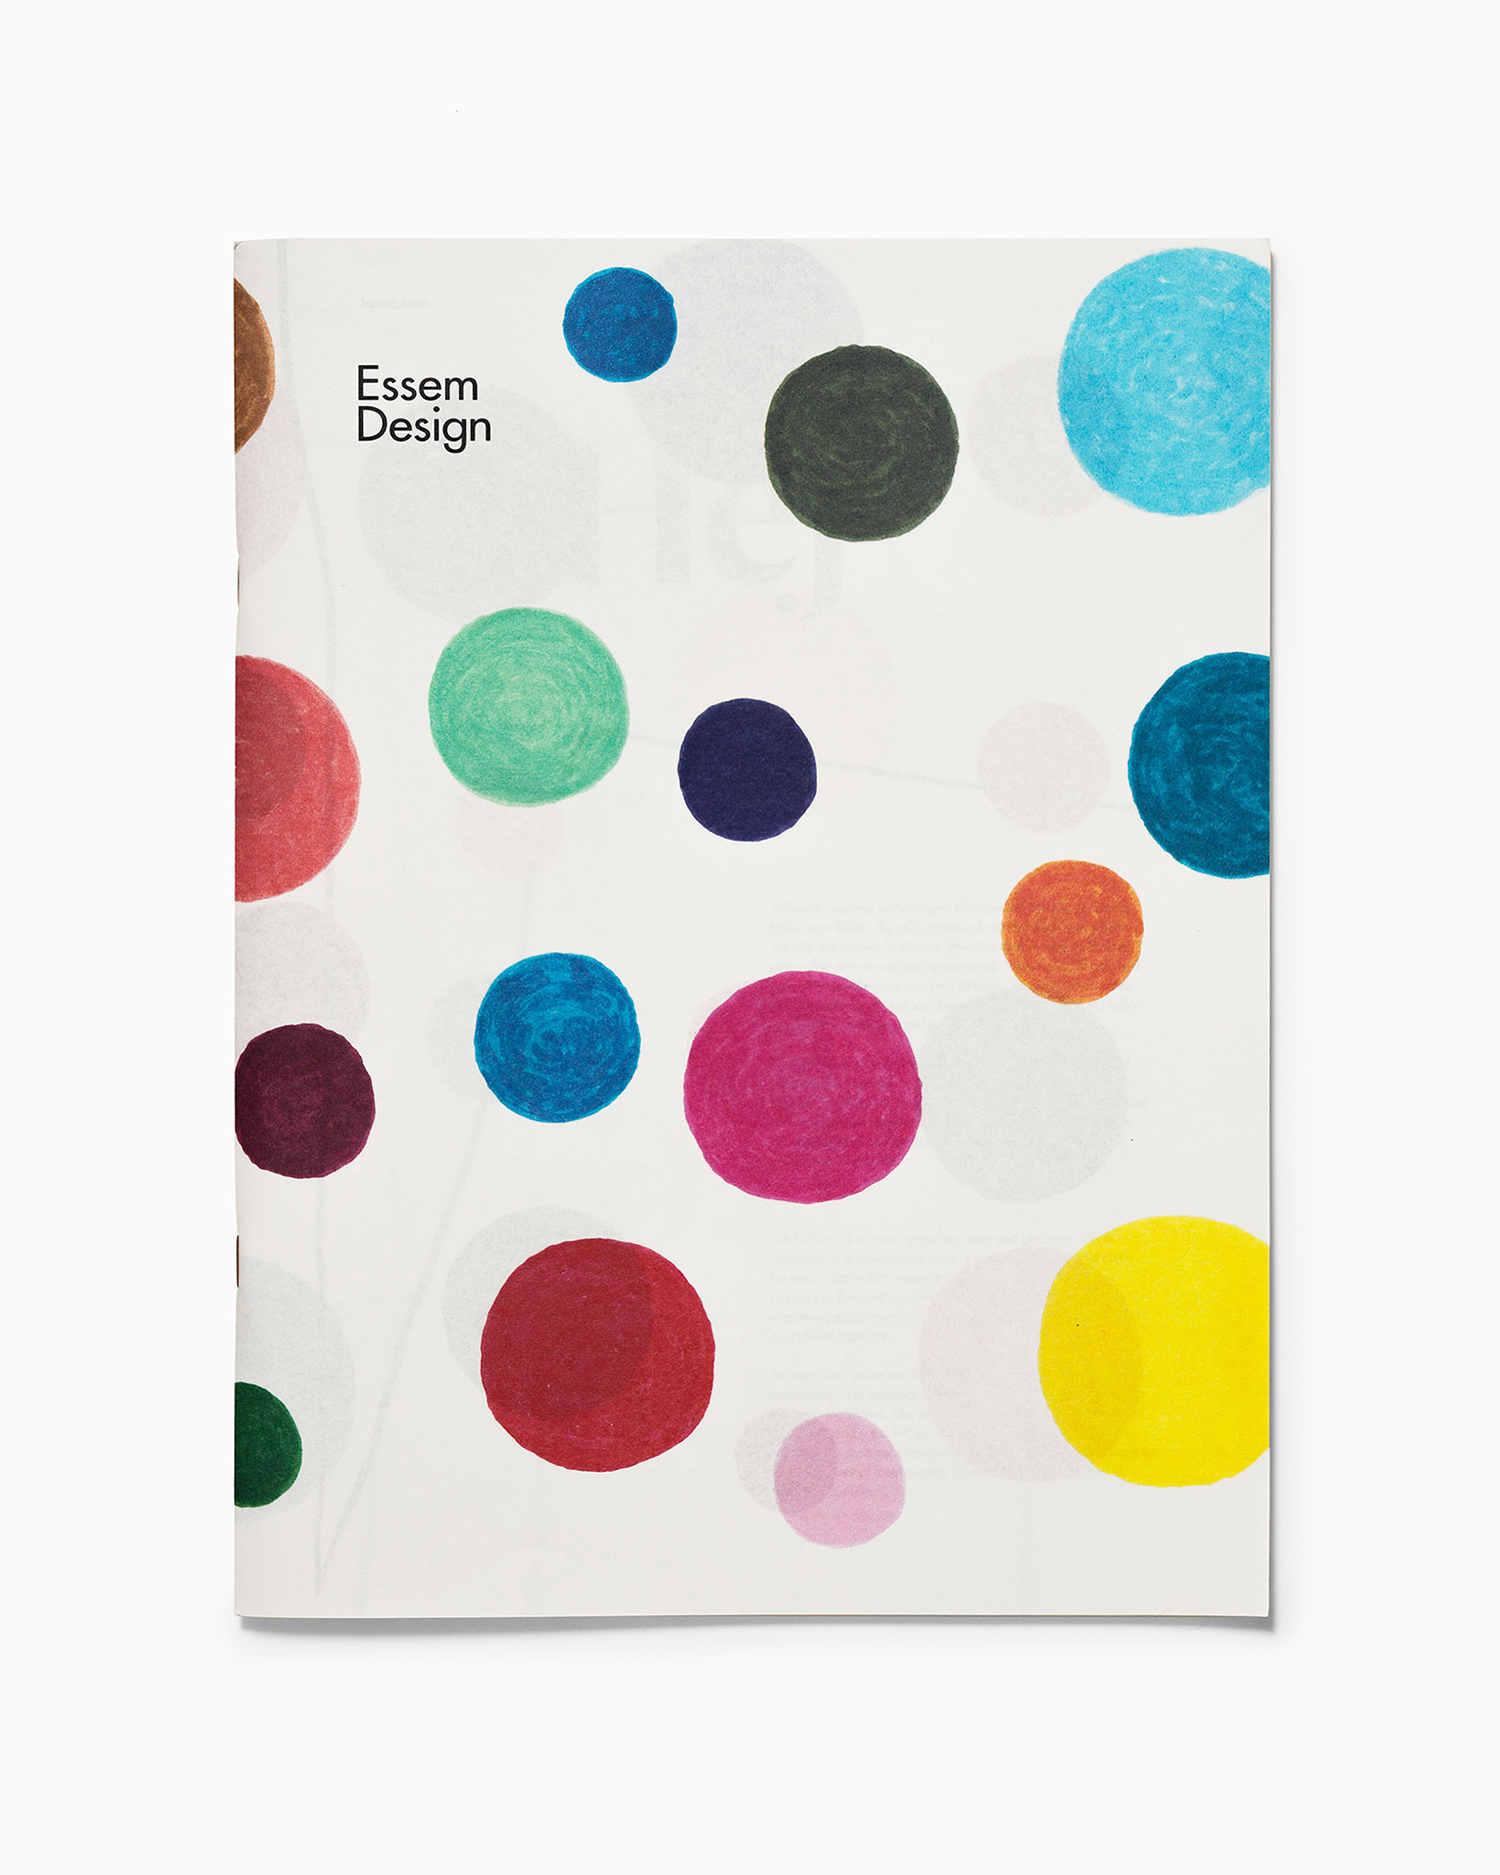 Creative Brochure Design Ideas – Essem Design Product Catalogue 2018 by Bedow